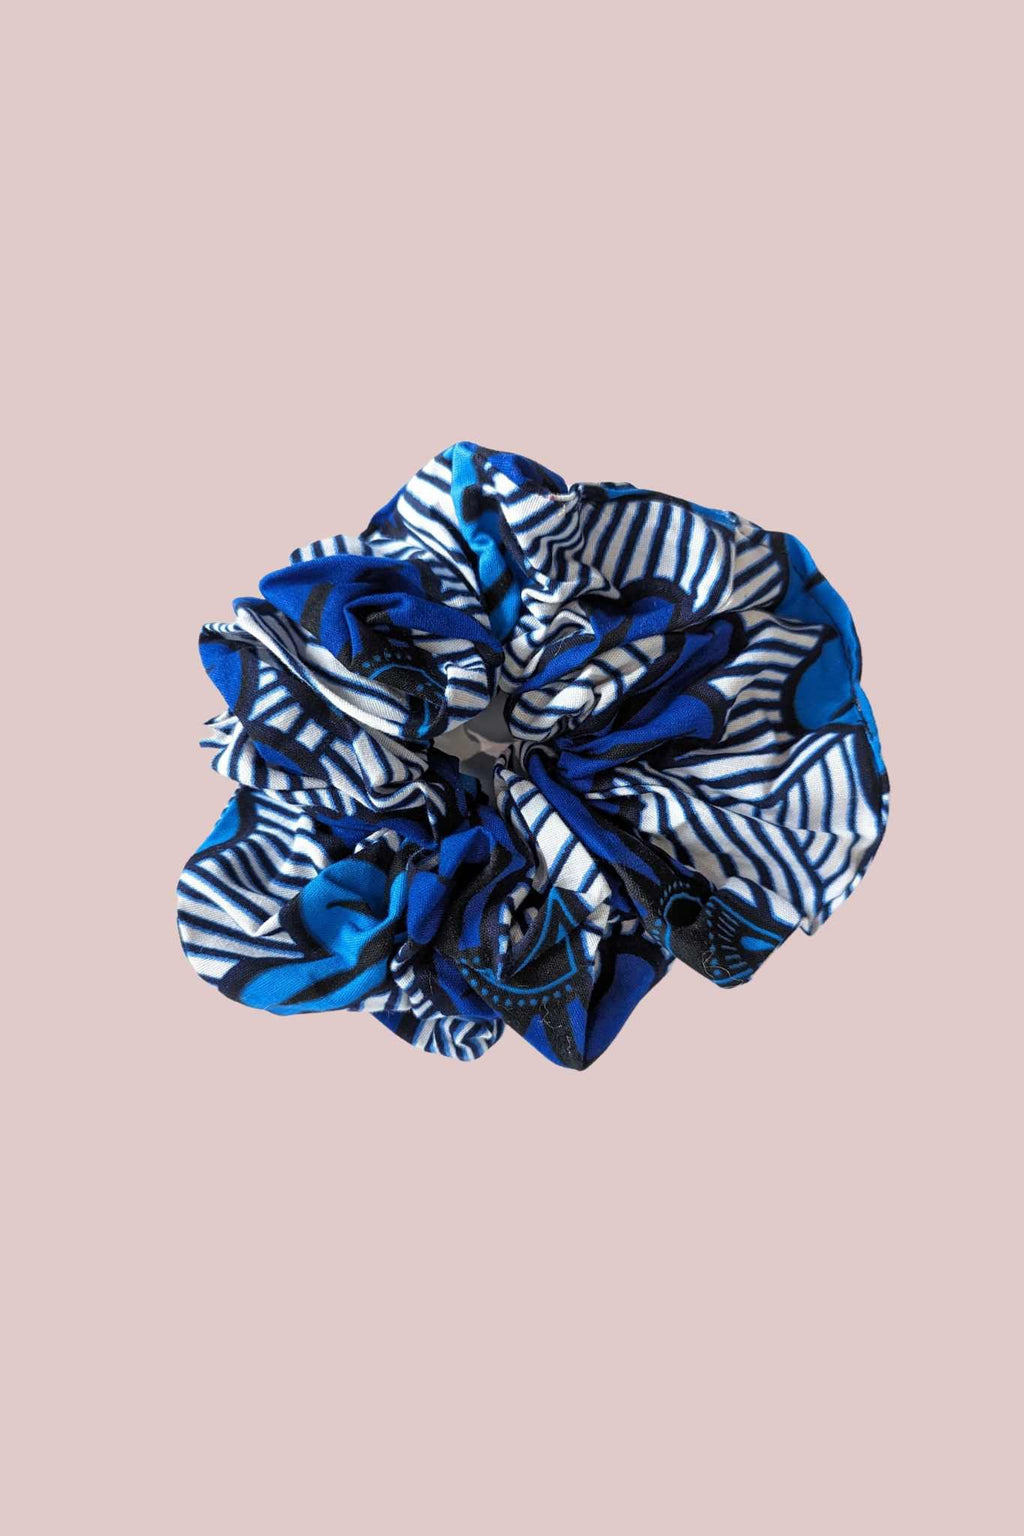 African Print Scrunchie, African Hair Accessories, Colourful Scrunchie, Hair Scrunchie, Colourful Hair band, Blue Hair Tie, Large Scrunchie